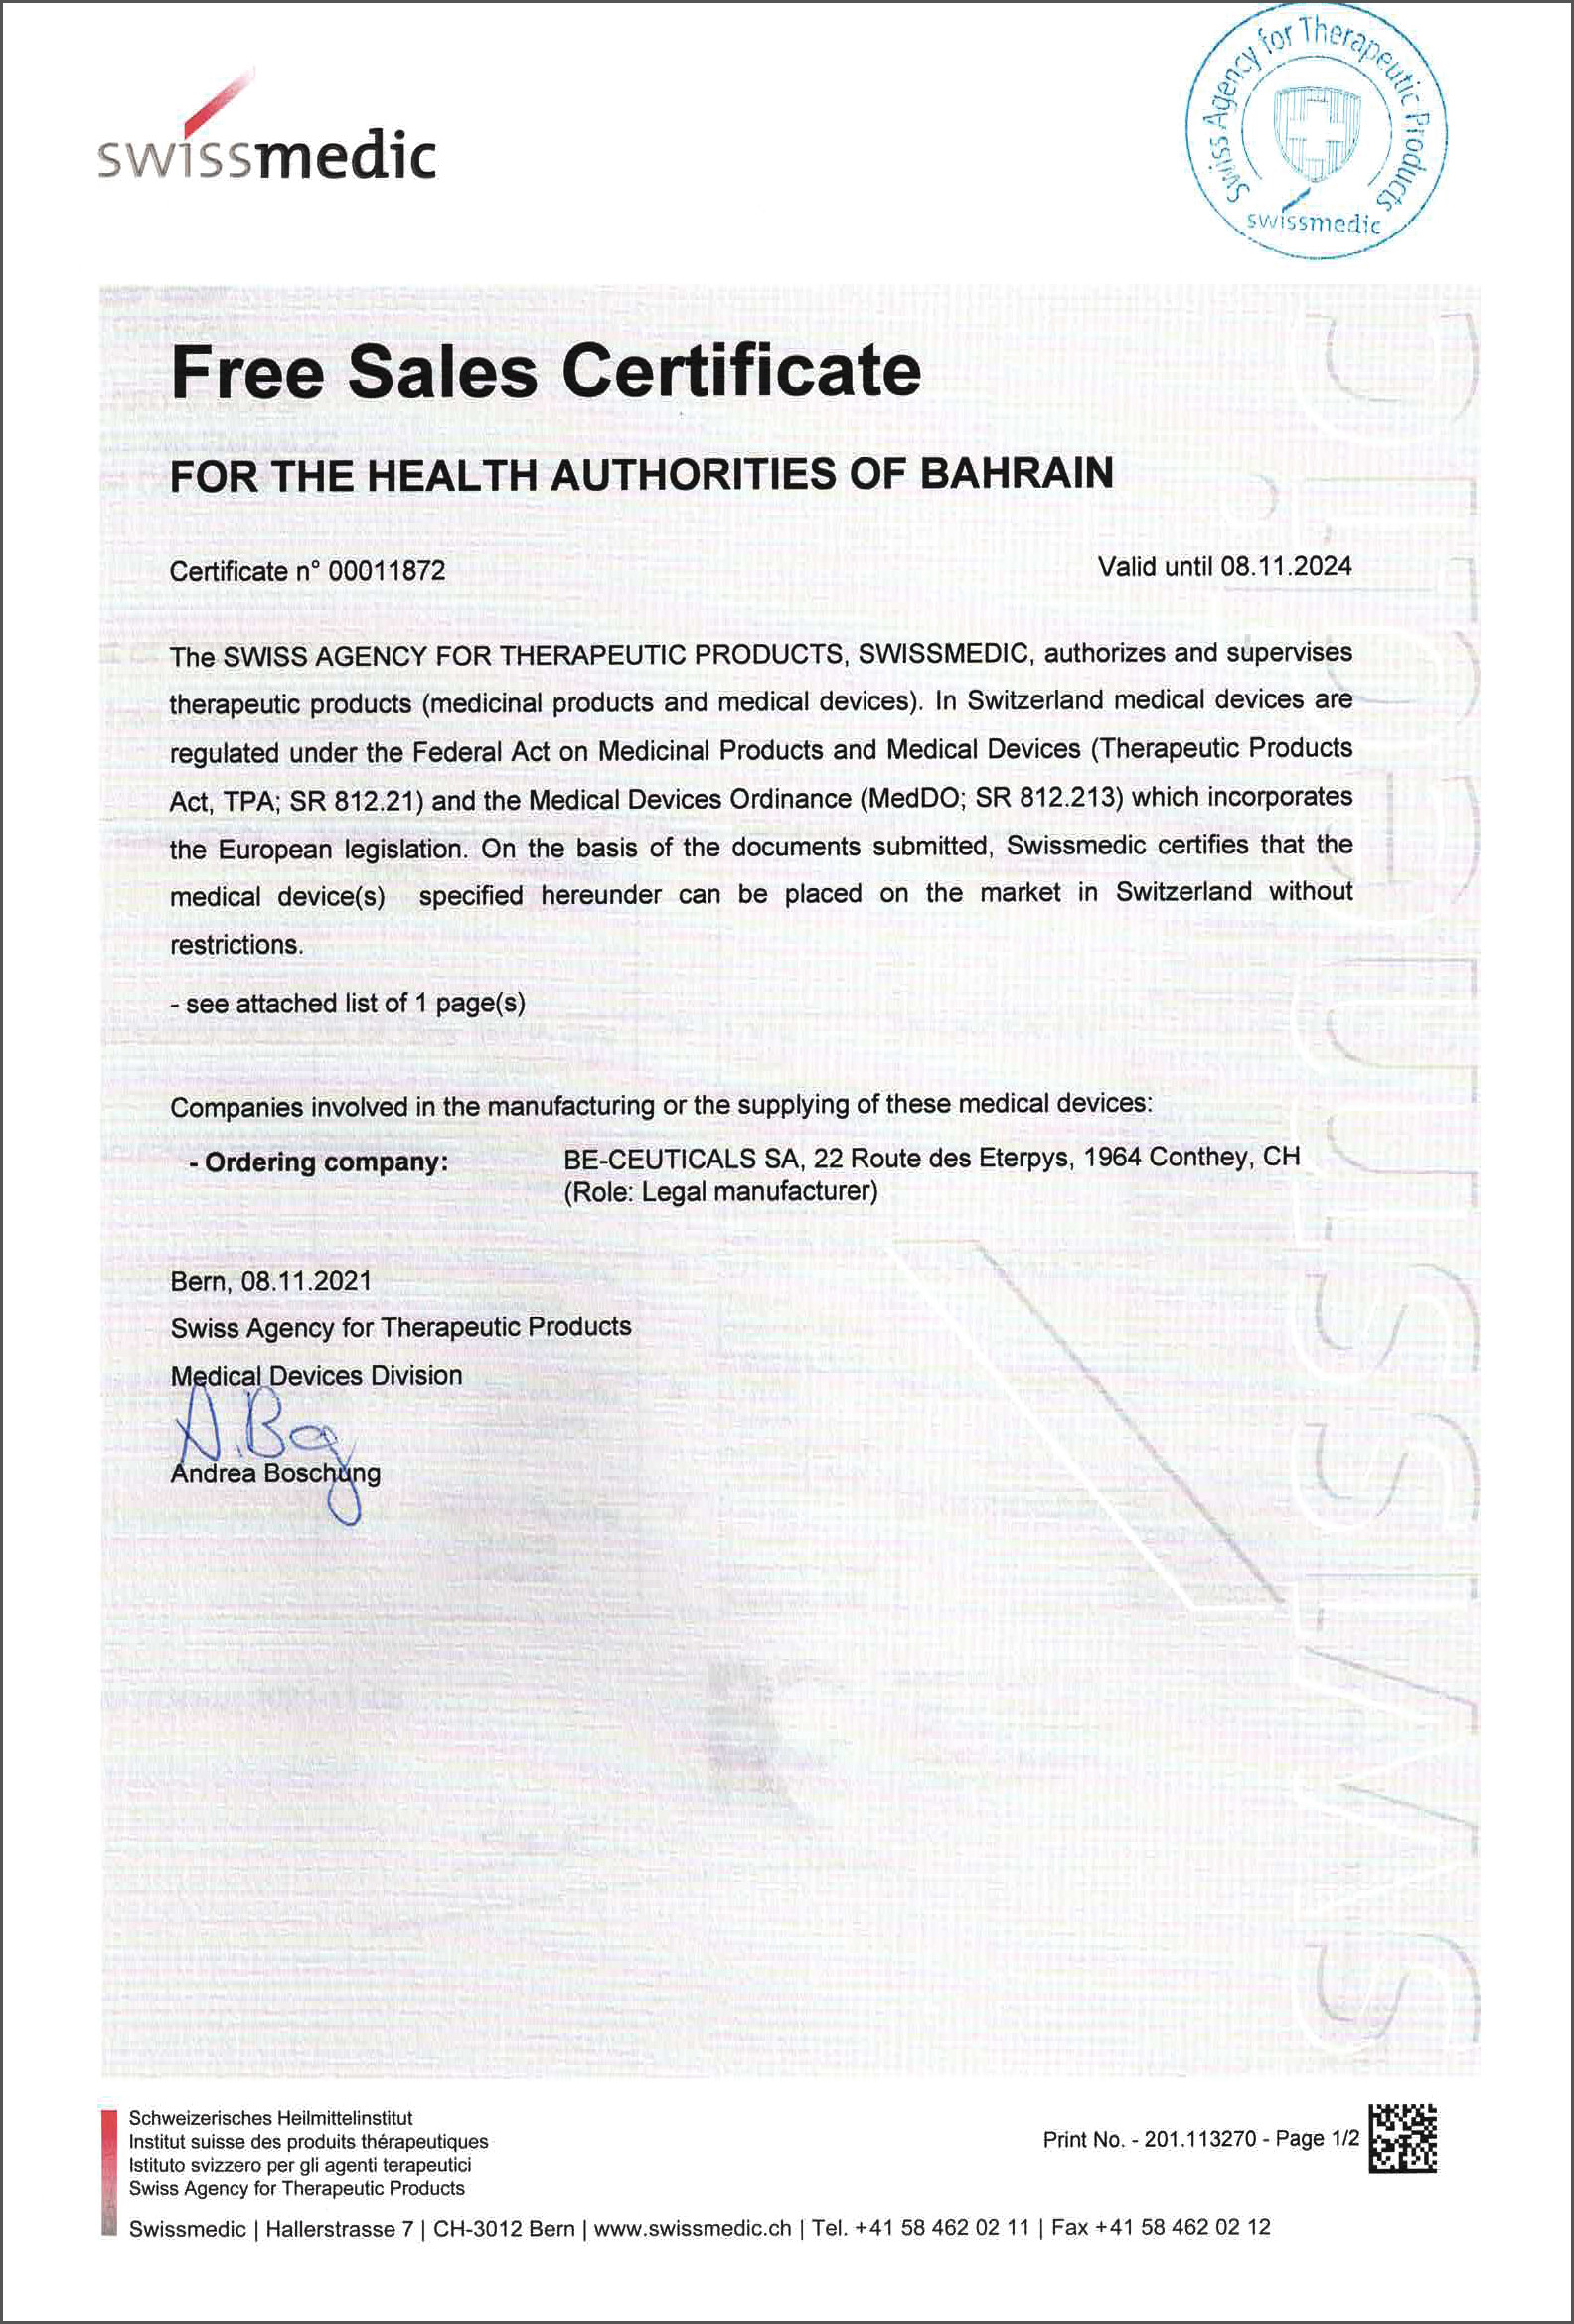 Swissmedic - Free Sales Certificate - Bahrain